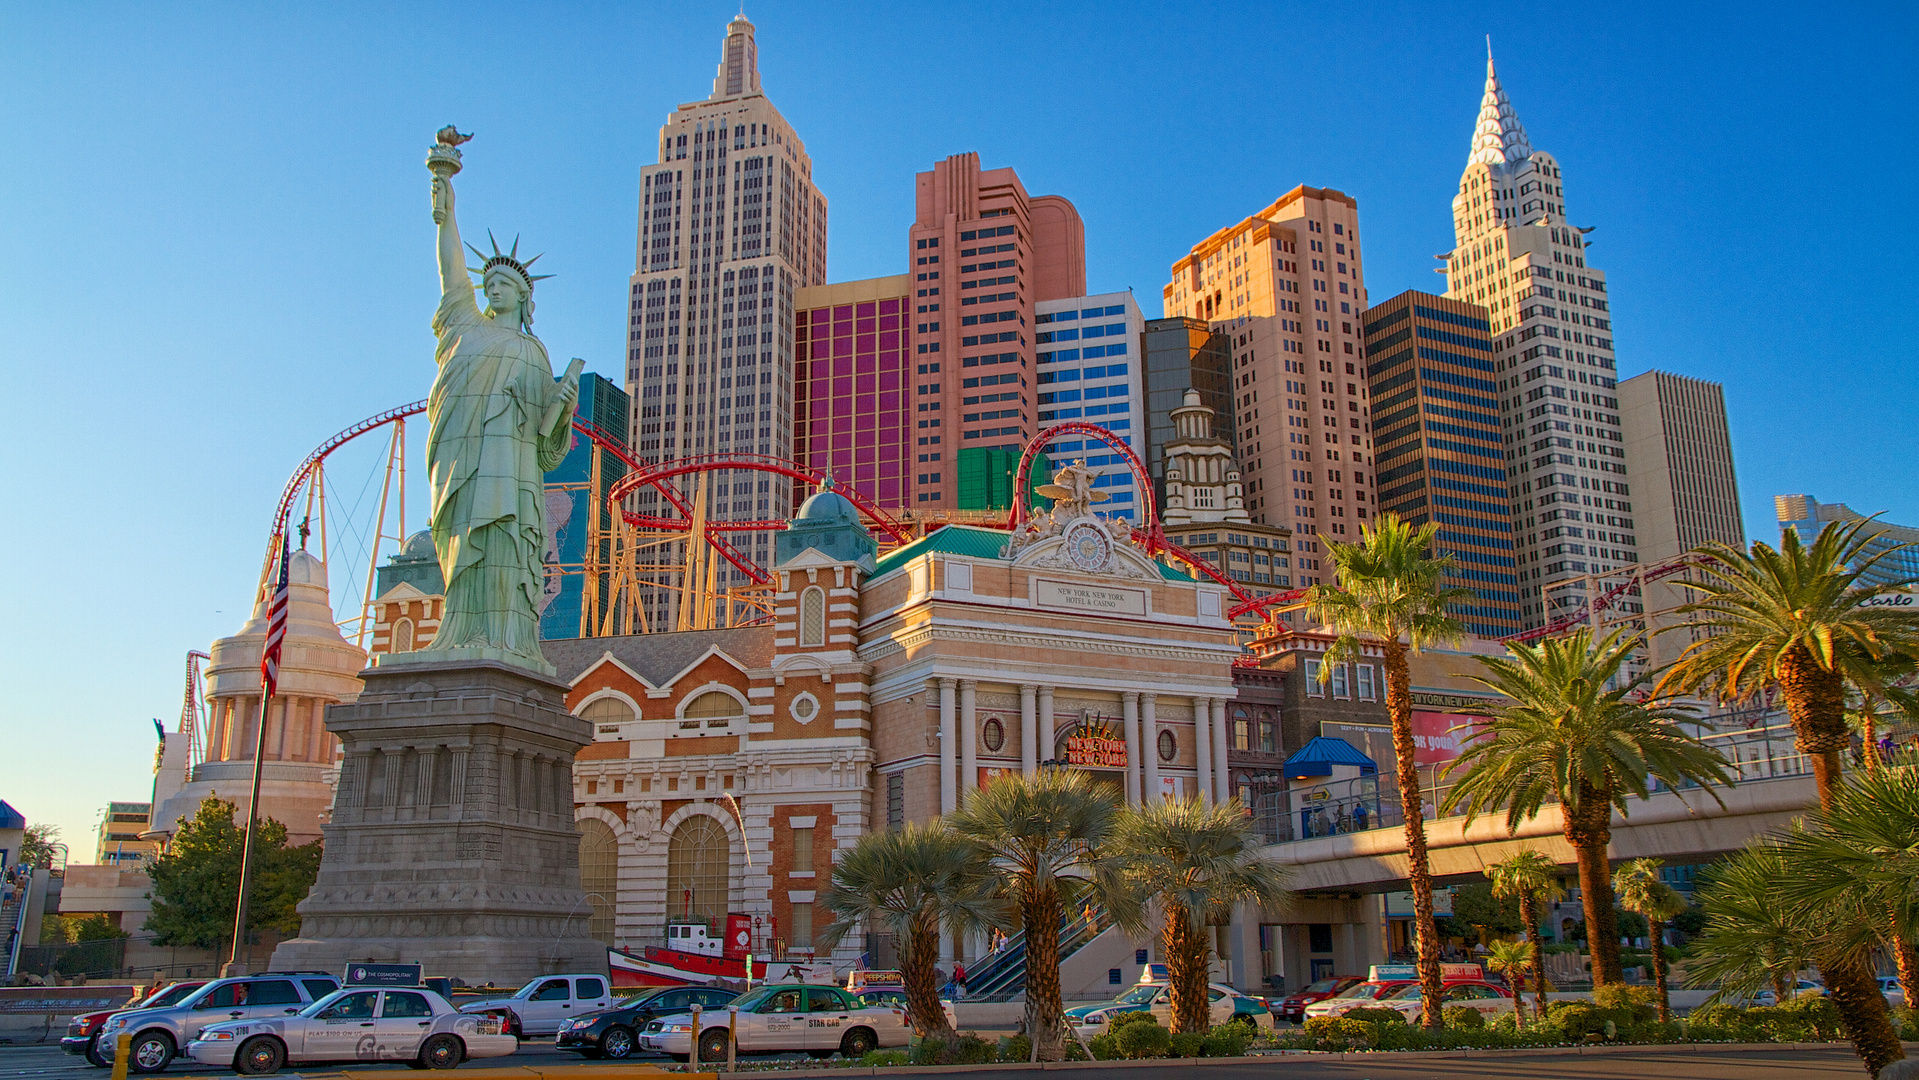 Hotel New York, New York in Las Vegas